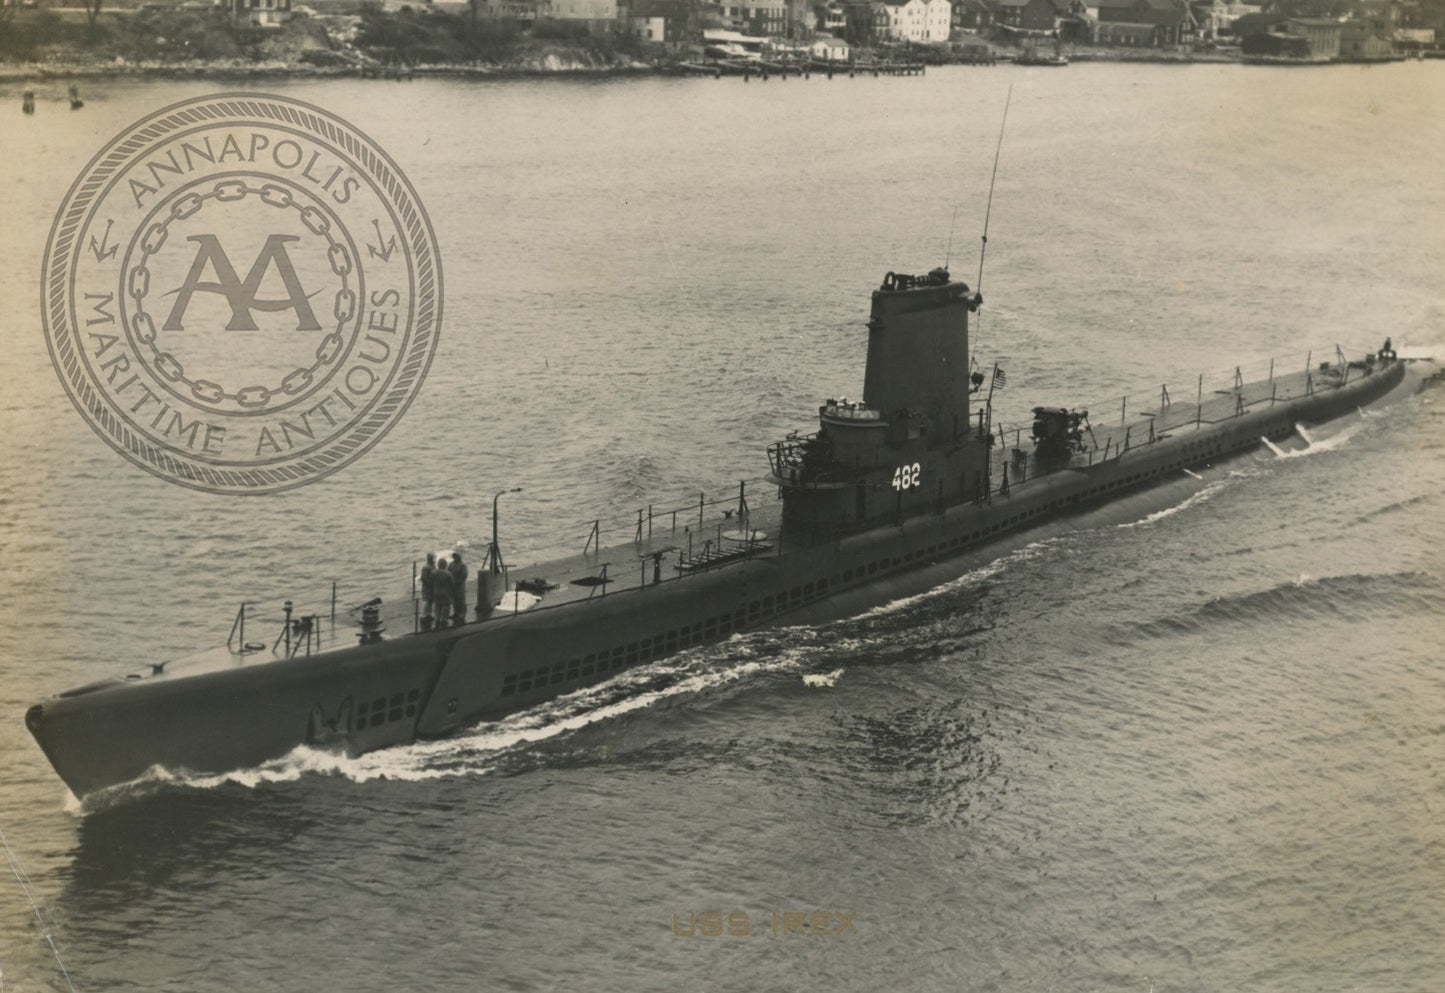 USS Irex (SS-482) Submarine